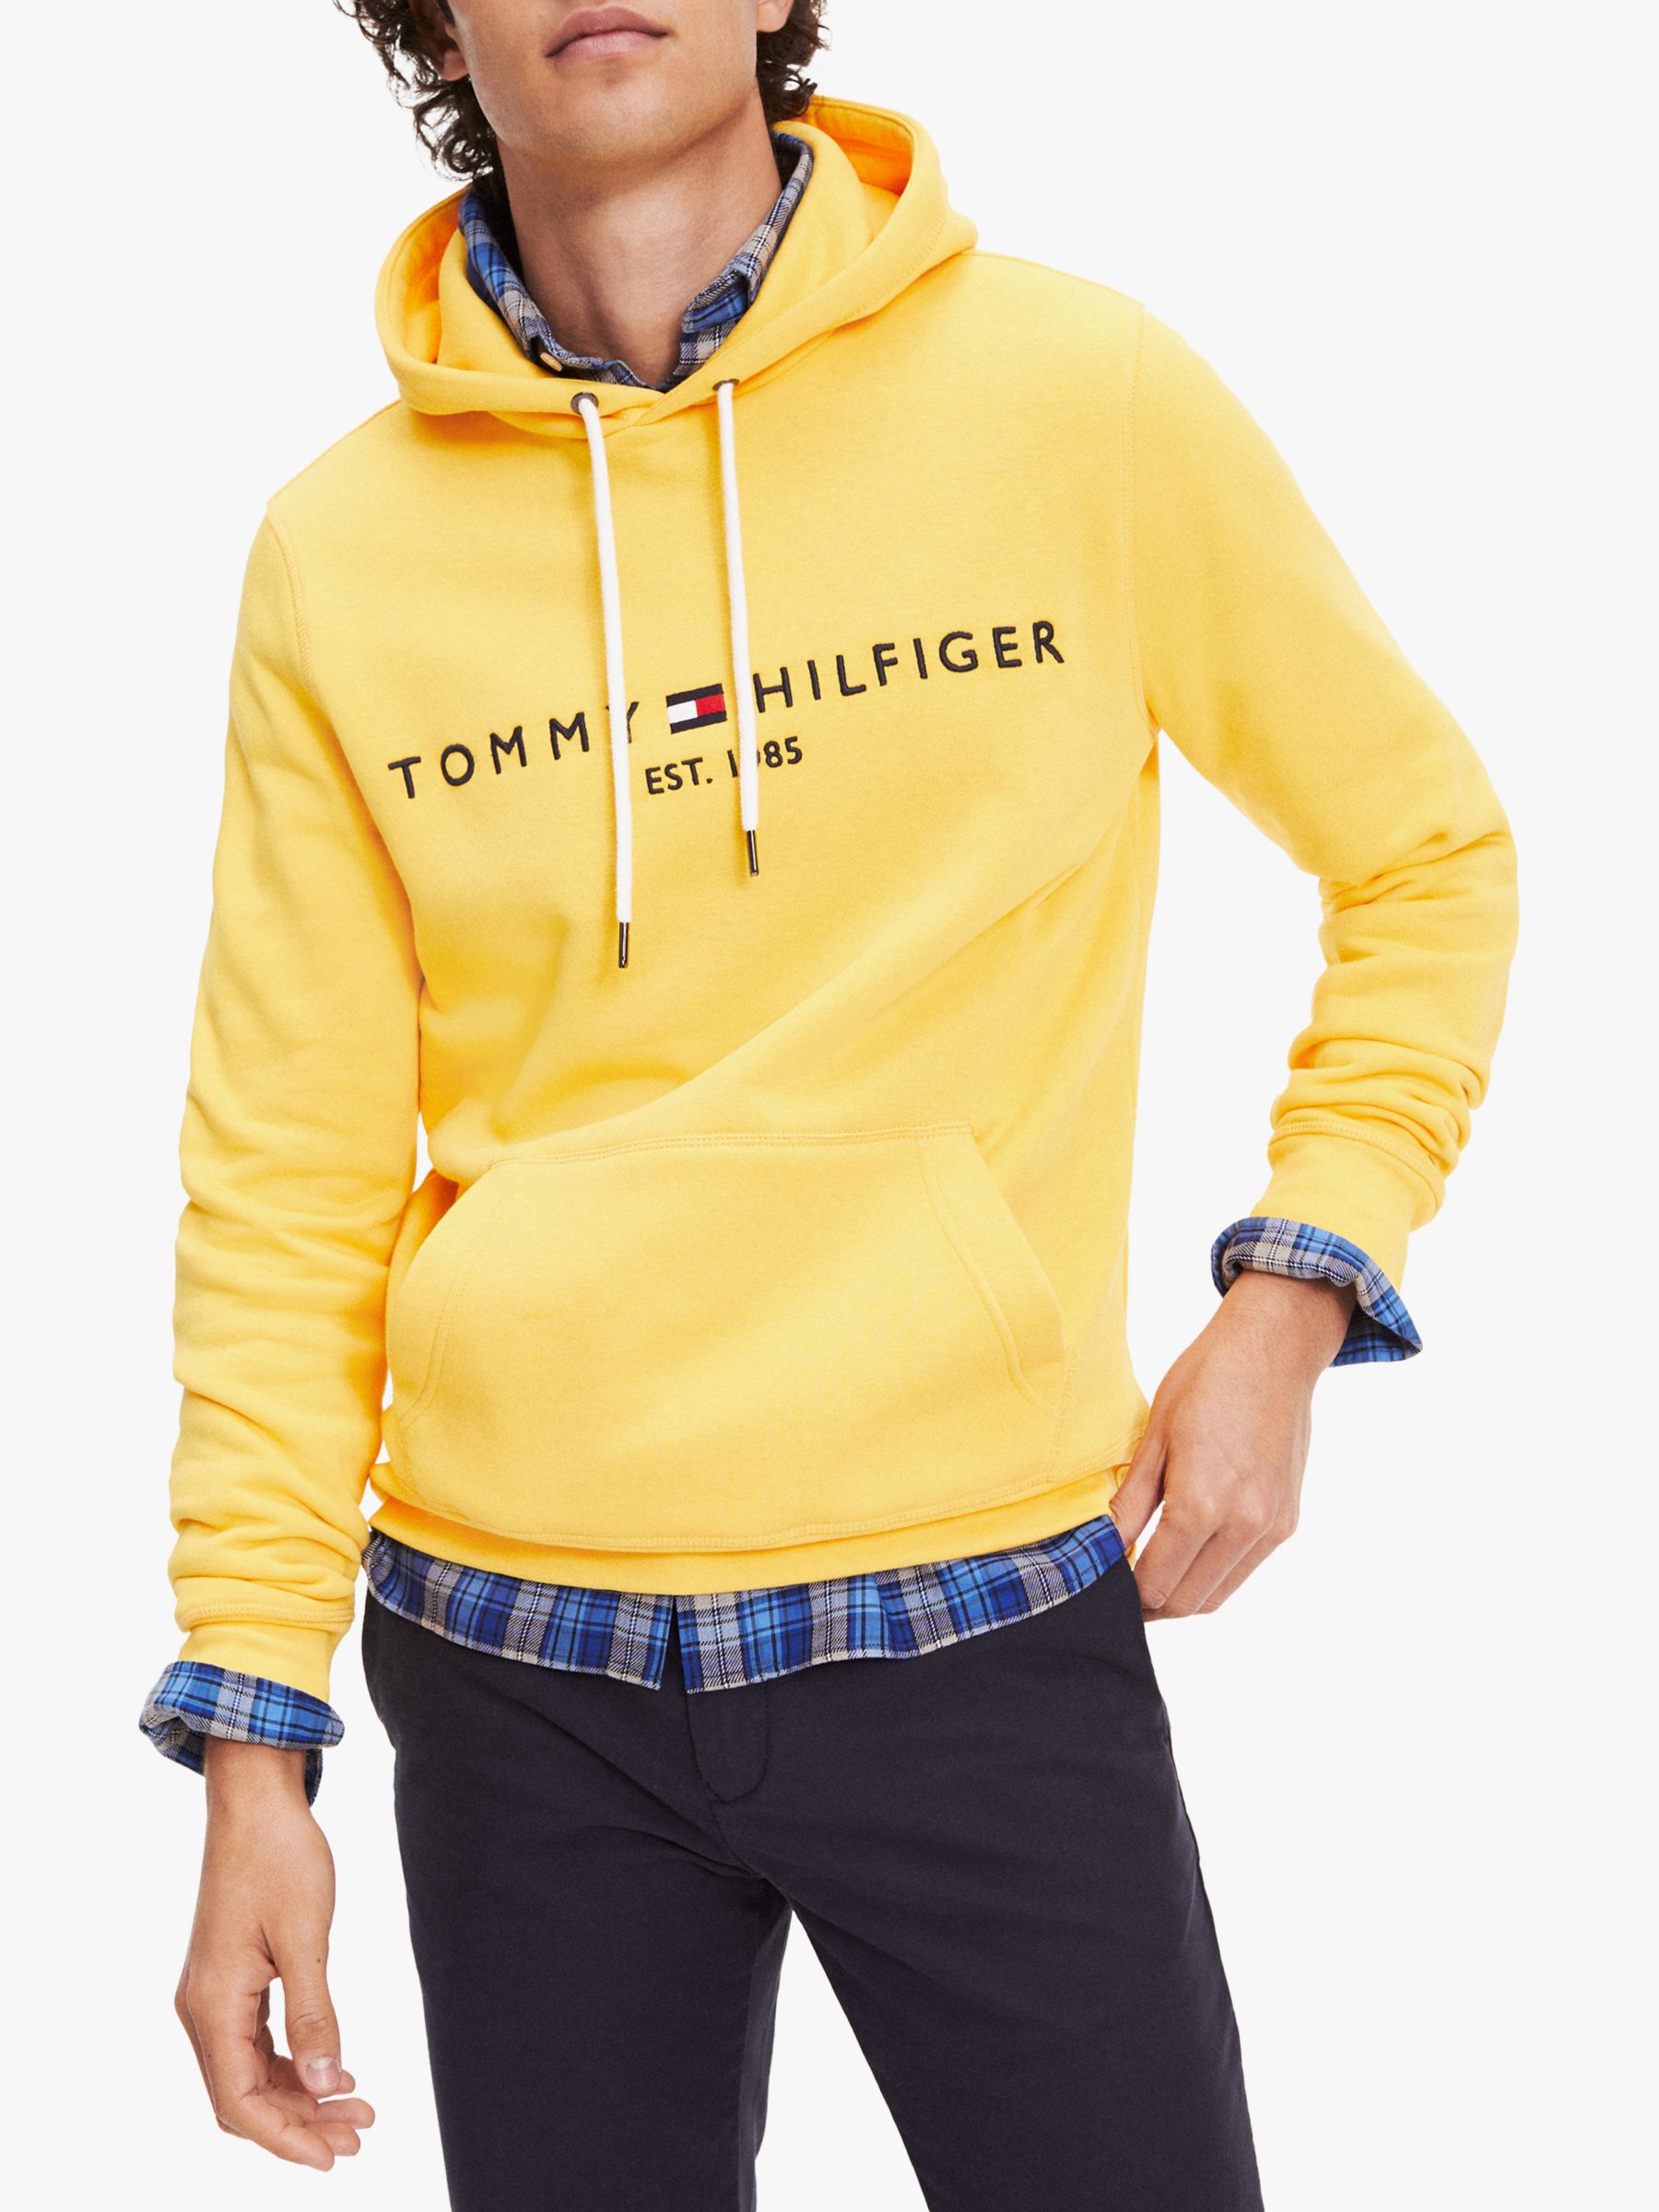 tommy hilfiger yellow hoodie women's